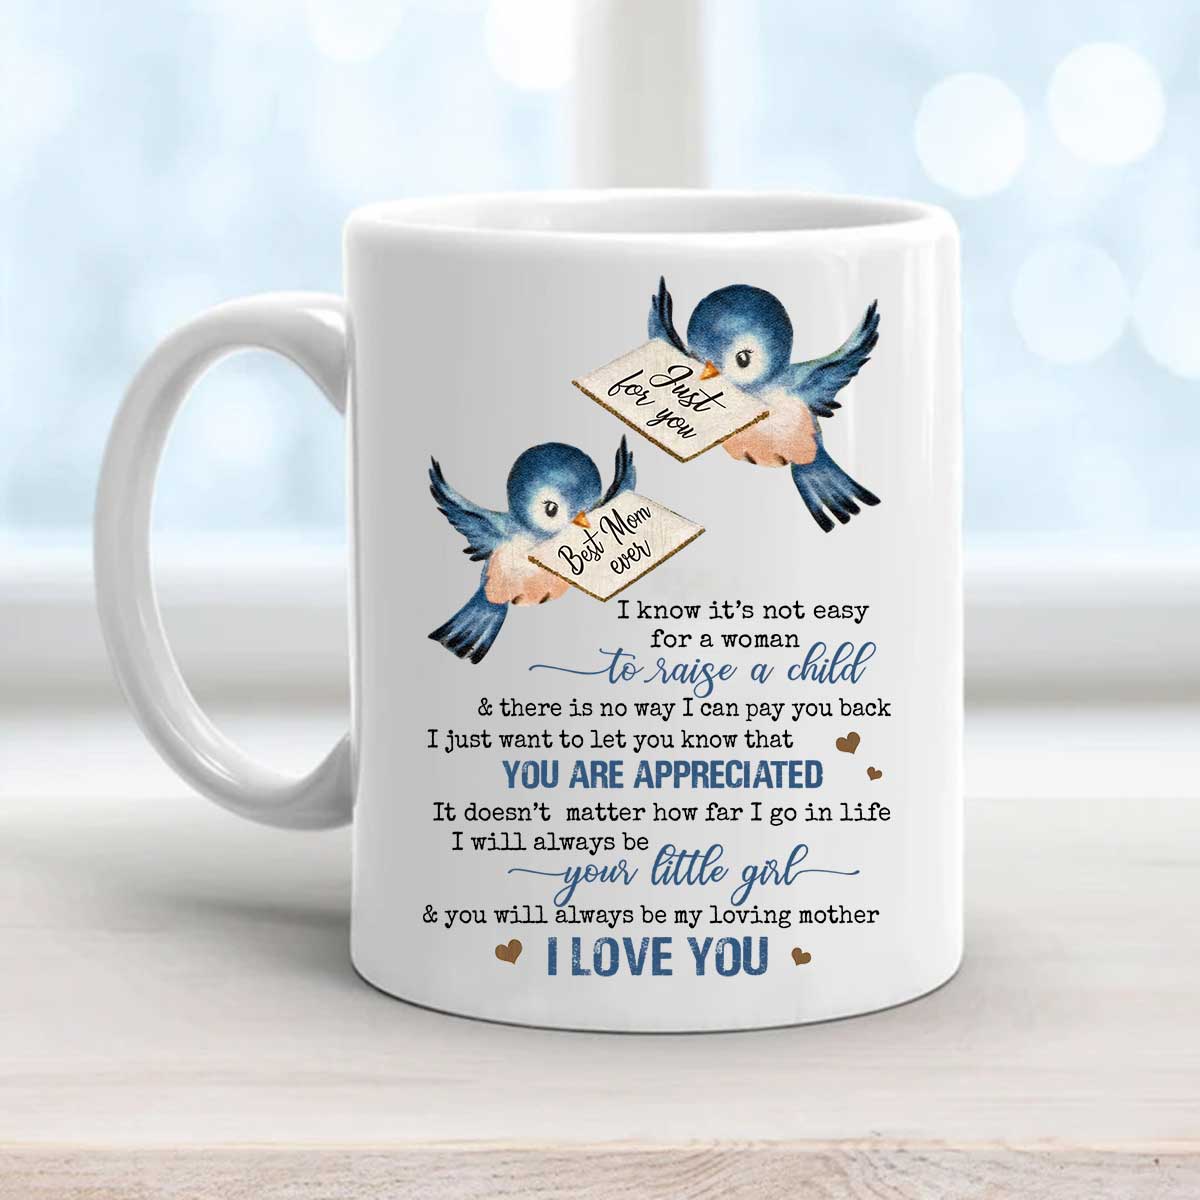 Gift For Mom Mug - Daughter to mom, Blue bird Mug - I will always be you little girl Mug - Gift For Mother's Day, Presents for Mom, Anniversary